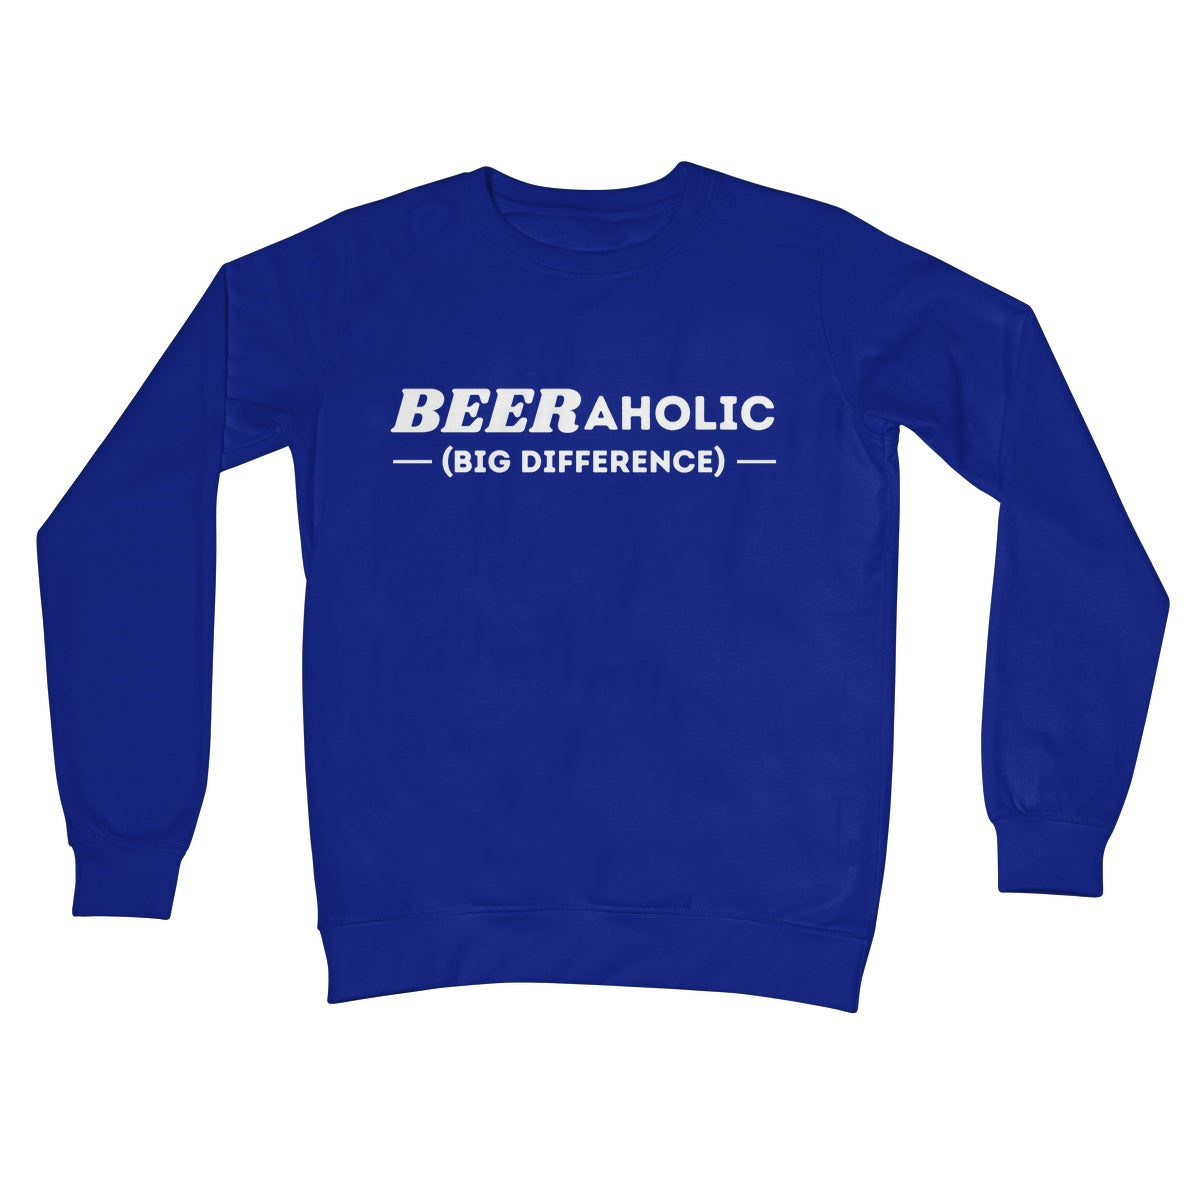 beeraholic jumper bright blue